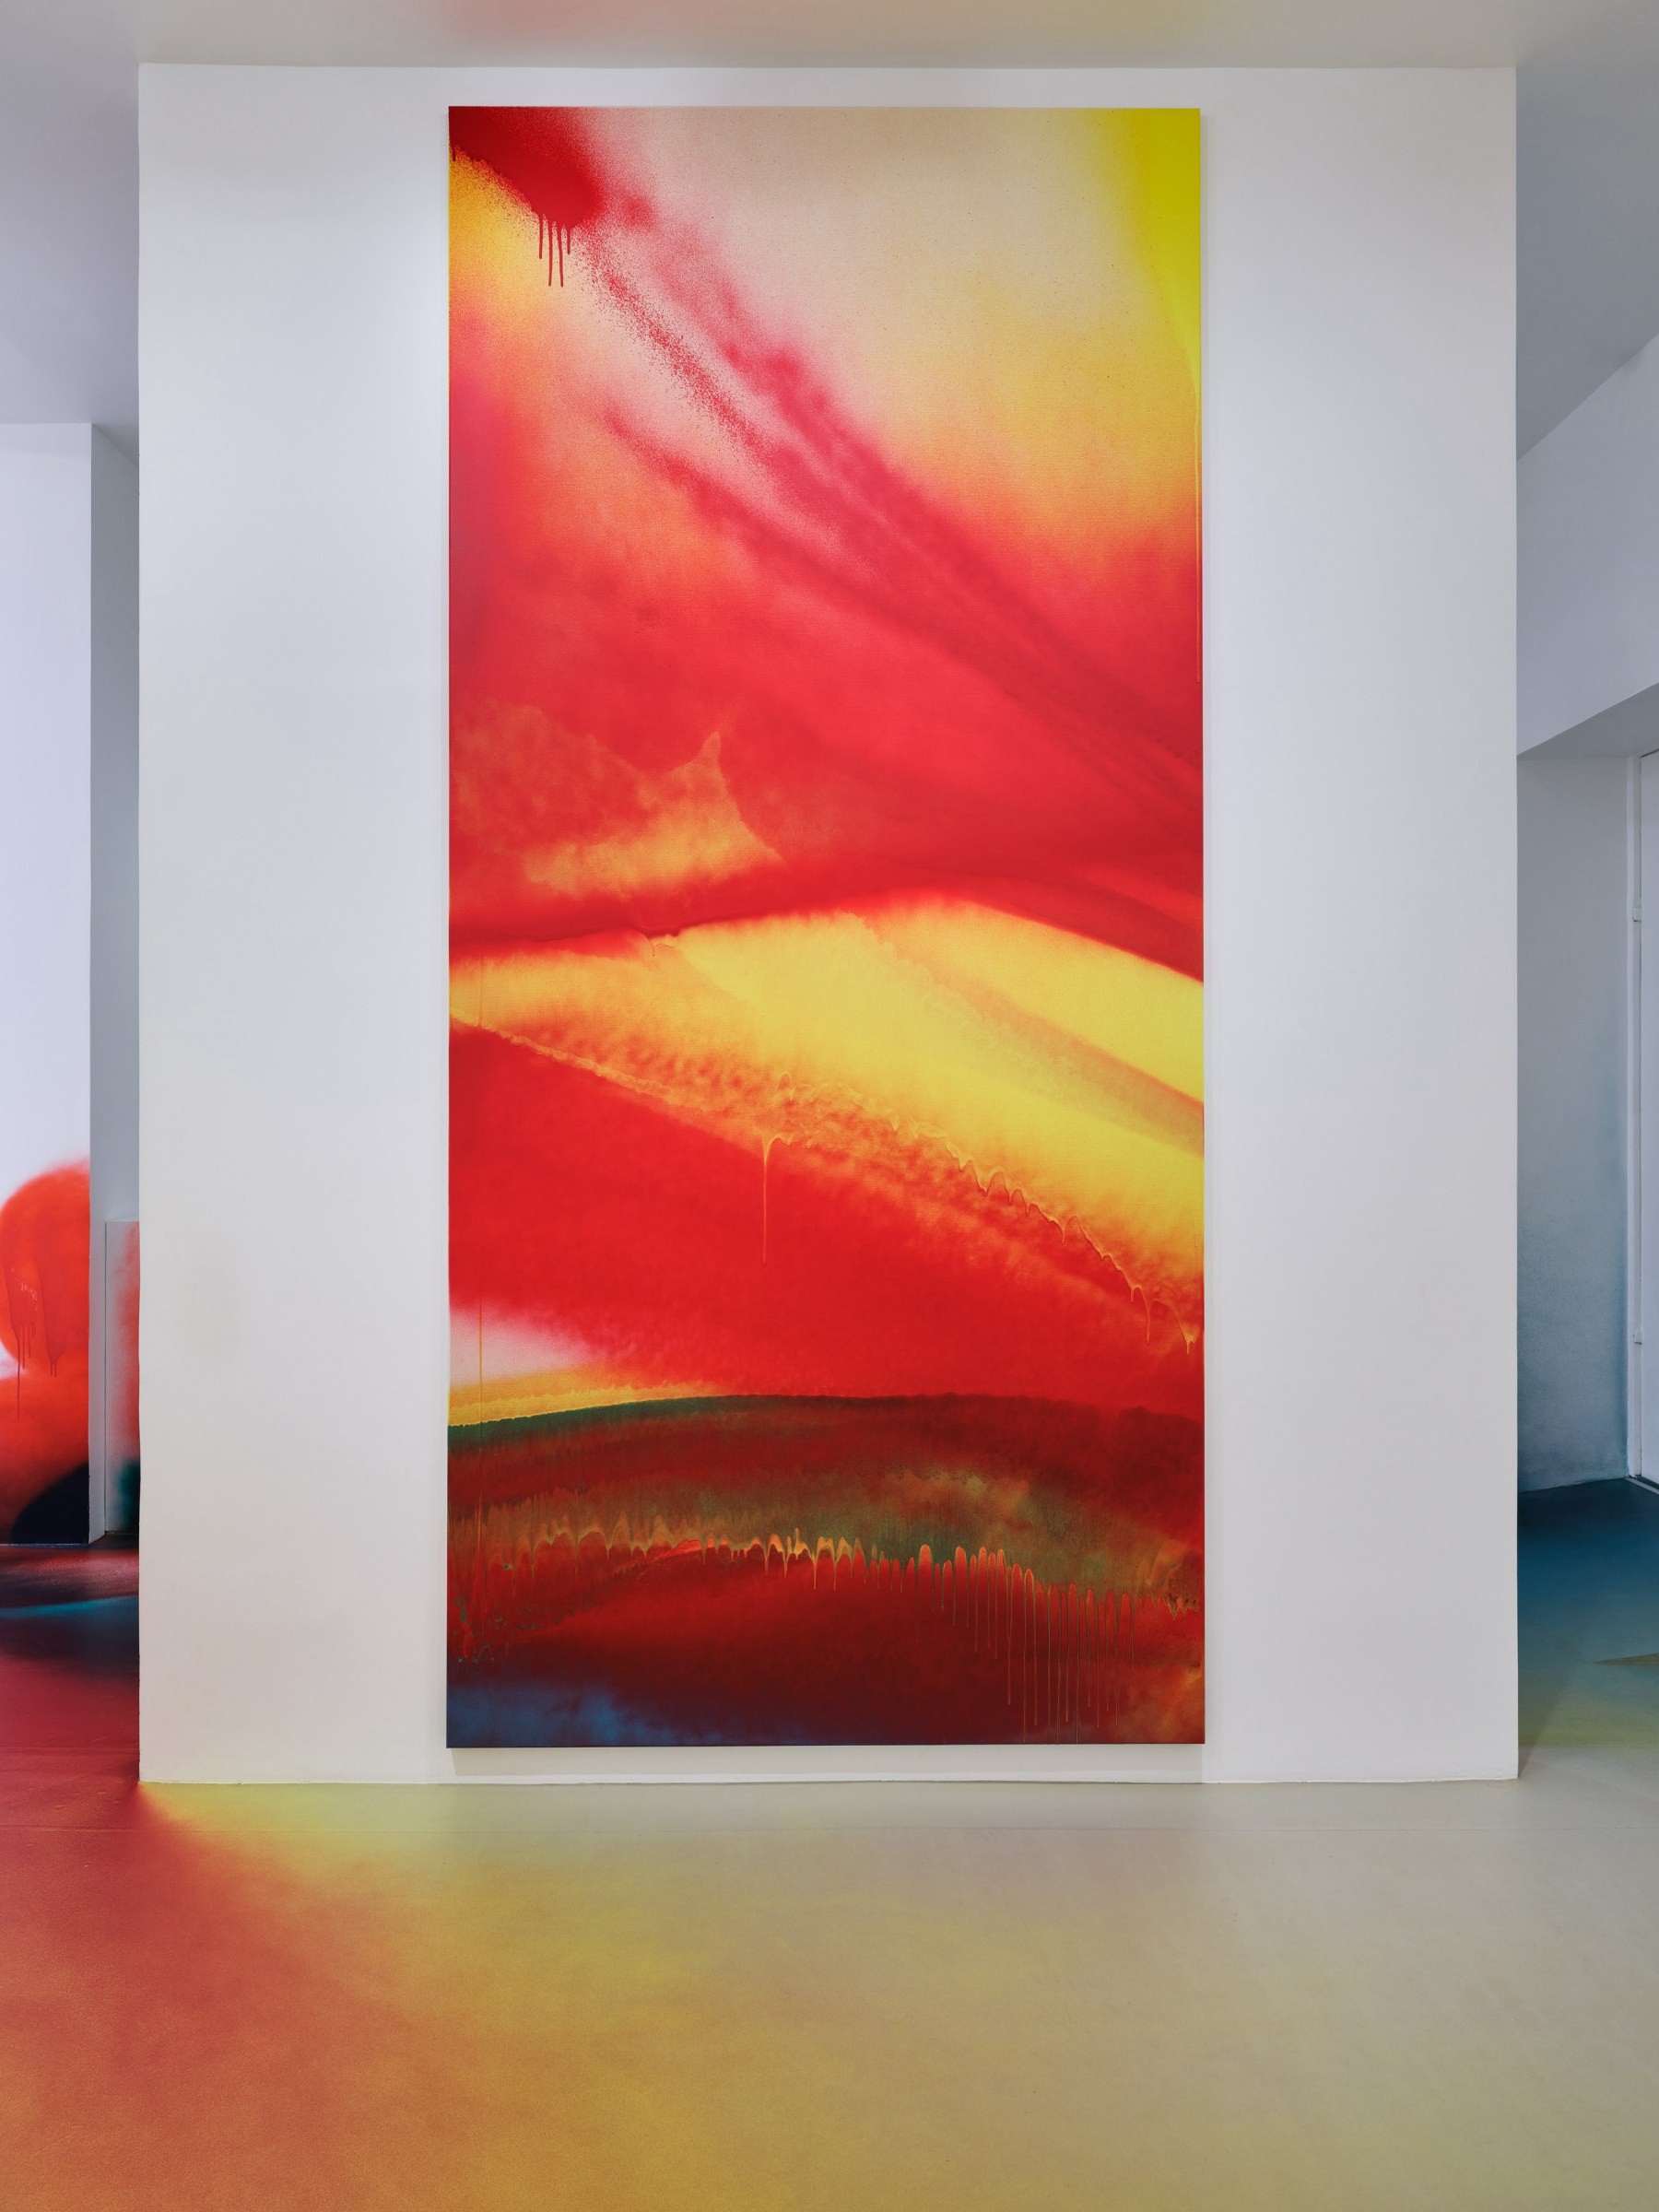 Installation image for Katharina Grosse: The Bedroom, at Galerie Max Hetzler